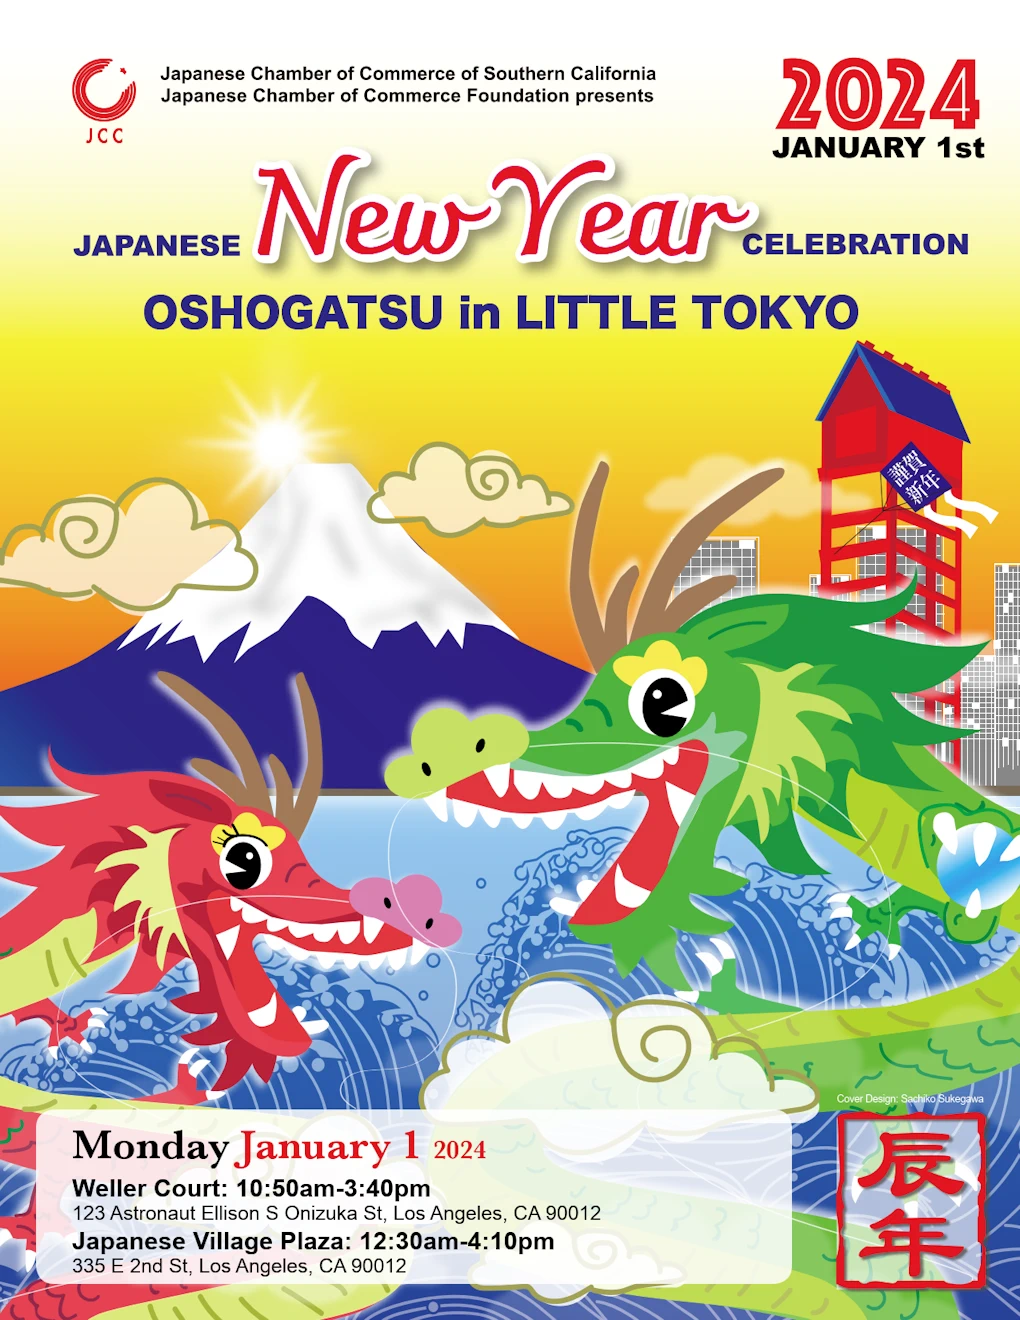 25th Annual Japanese New Year's Oshogatsu Festival Event - Little Tokyo (2 Locations - Jan 1st, 2024) Entertainment 